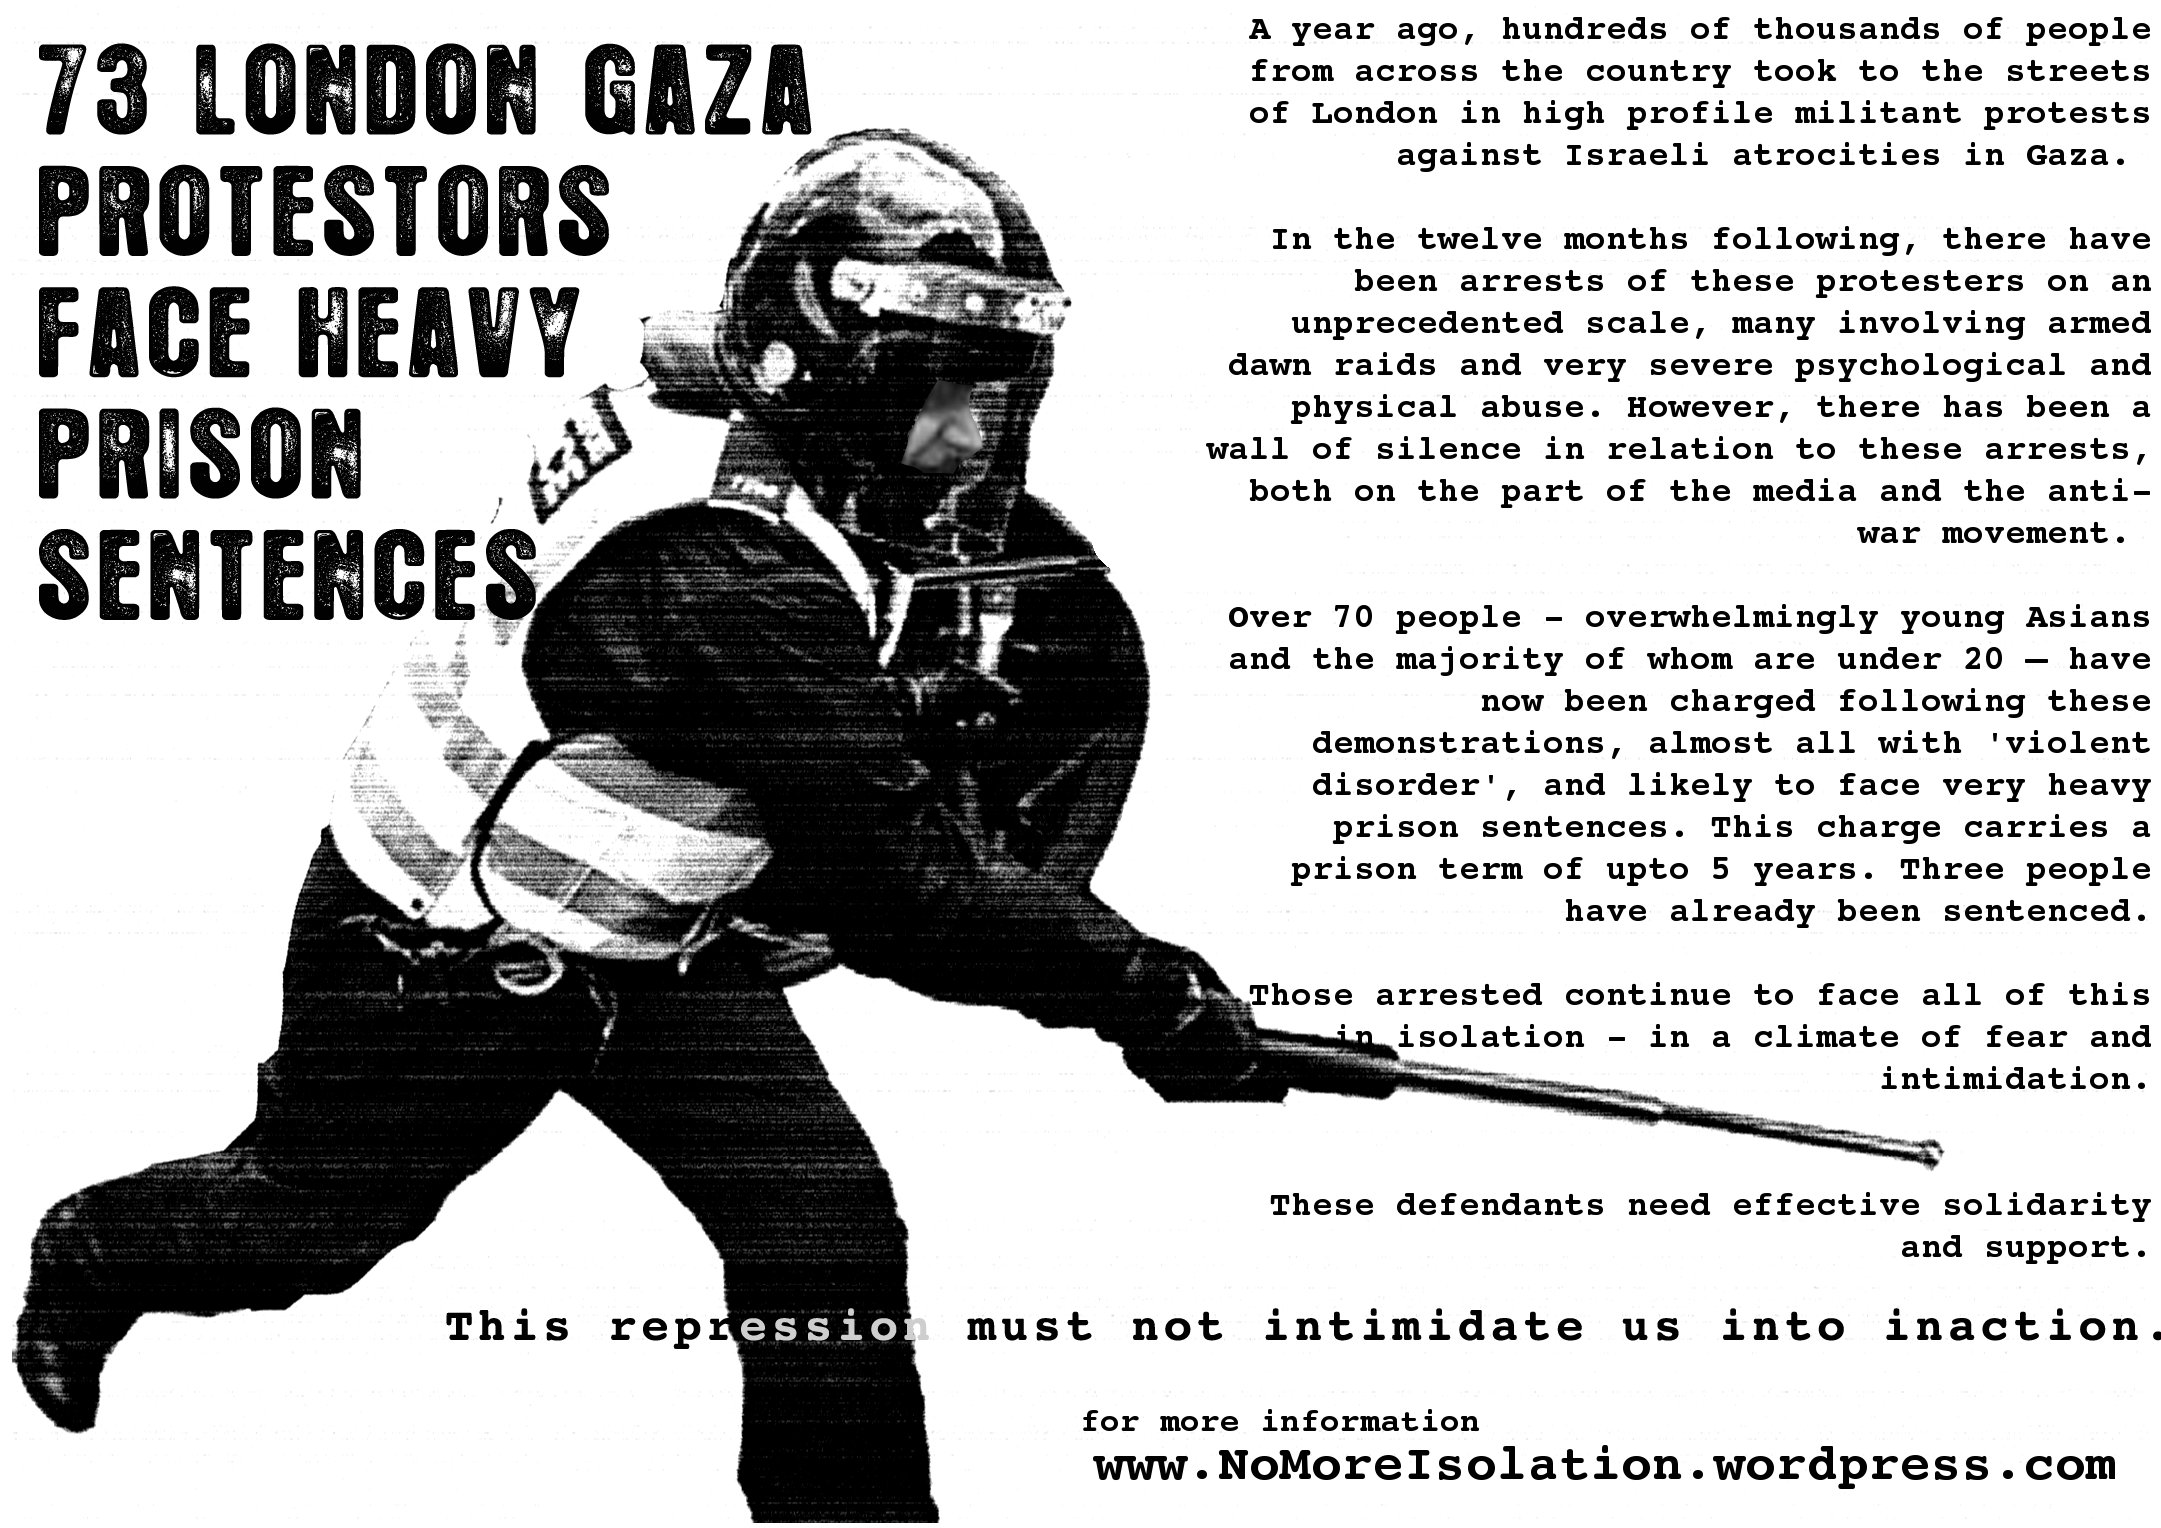 Support Gaza protesters facing heavy sentences